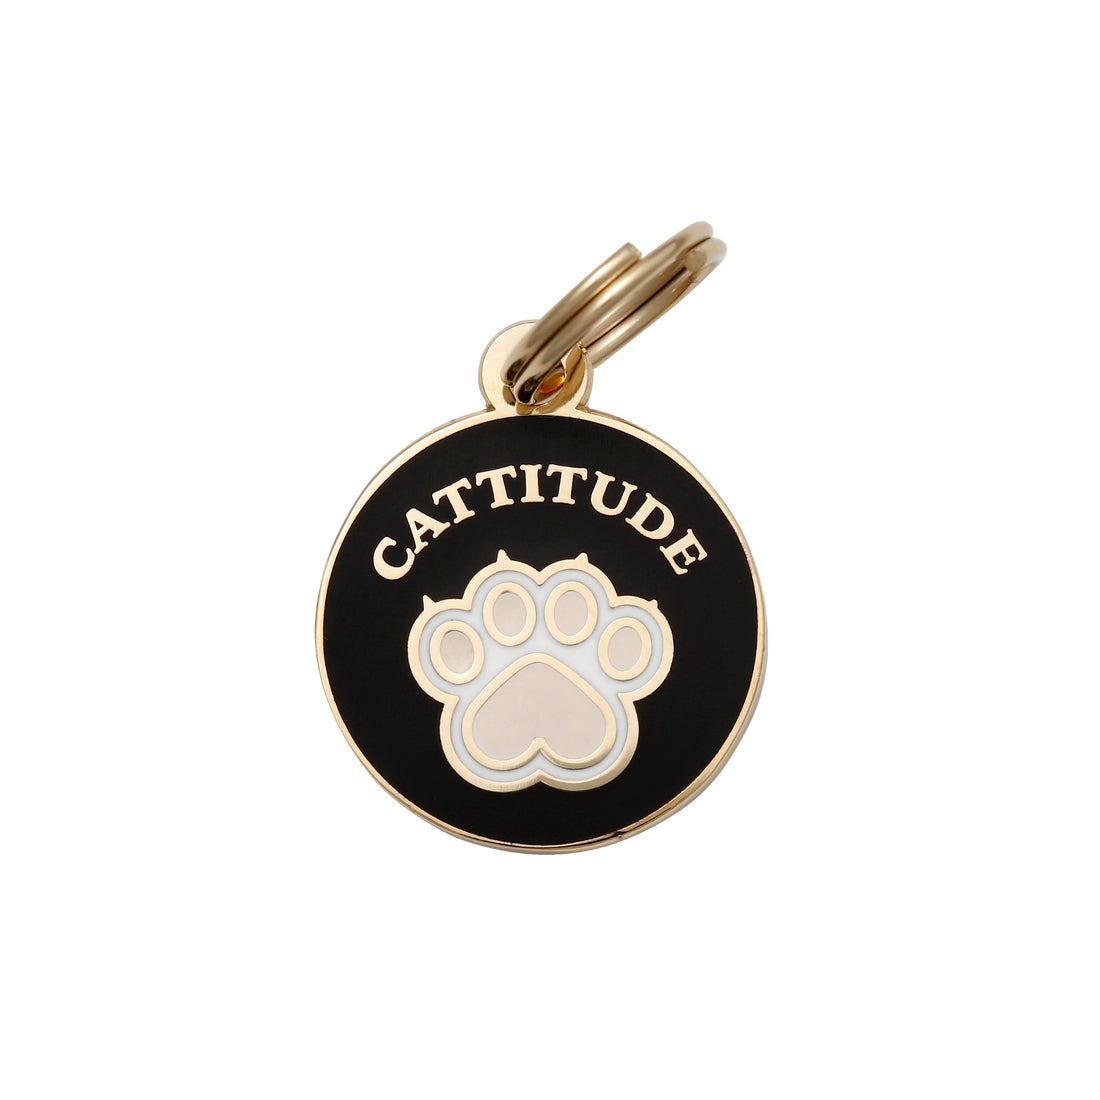 Cattitude Pet ID Tag